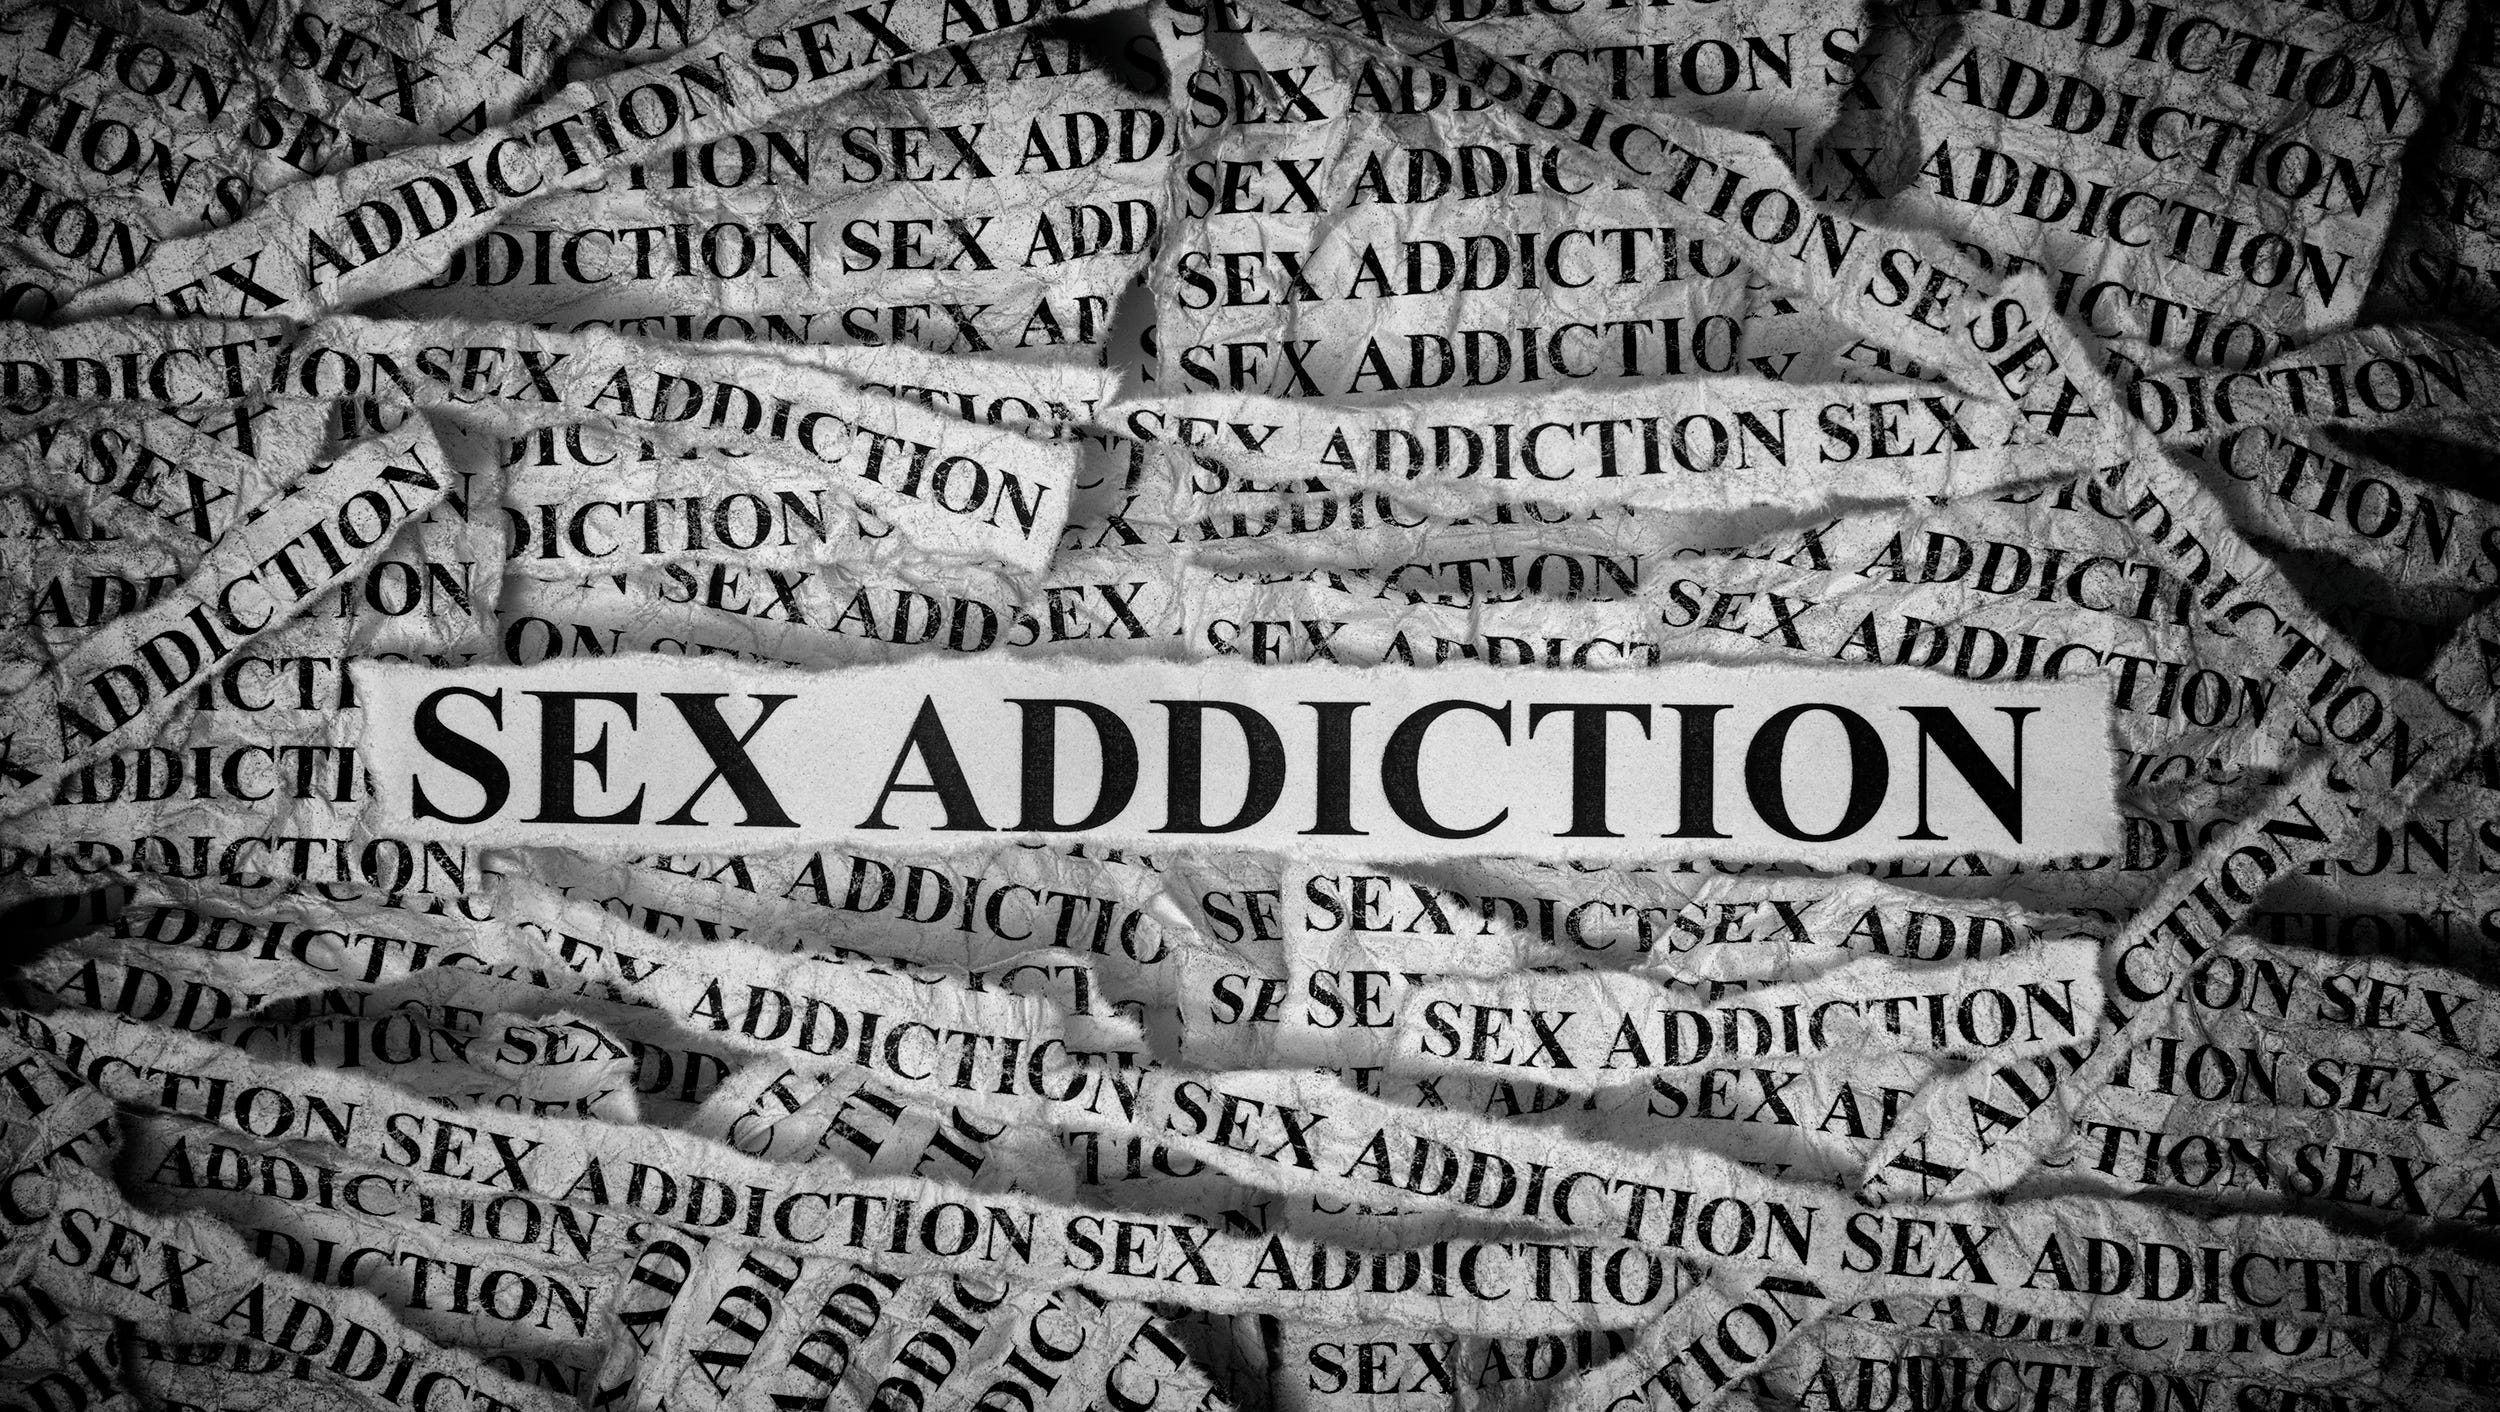 Life inside a sex addiction clinic image